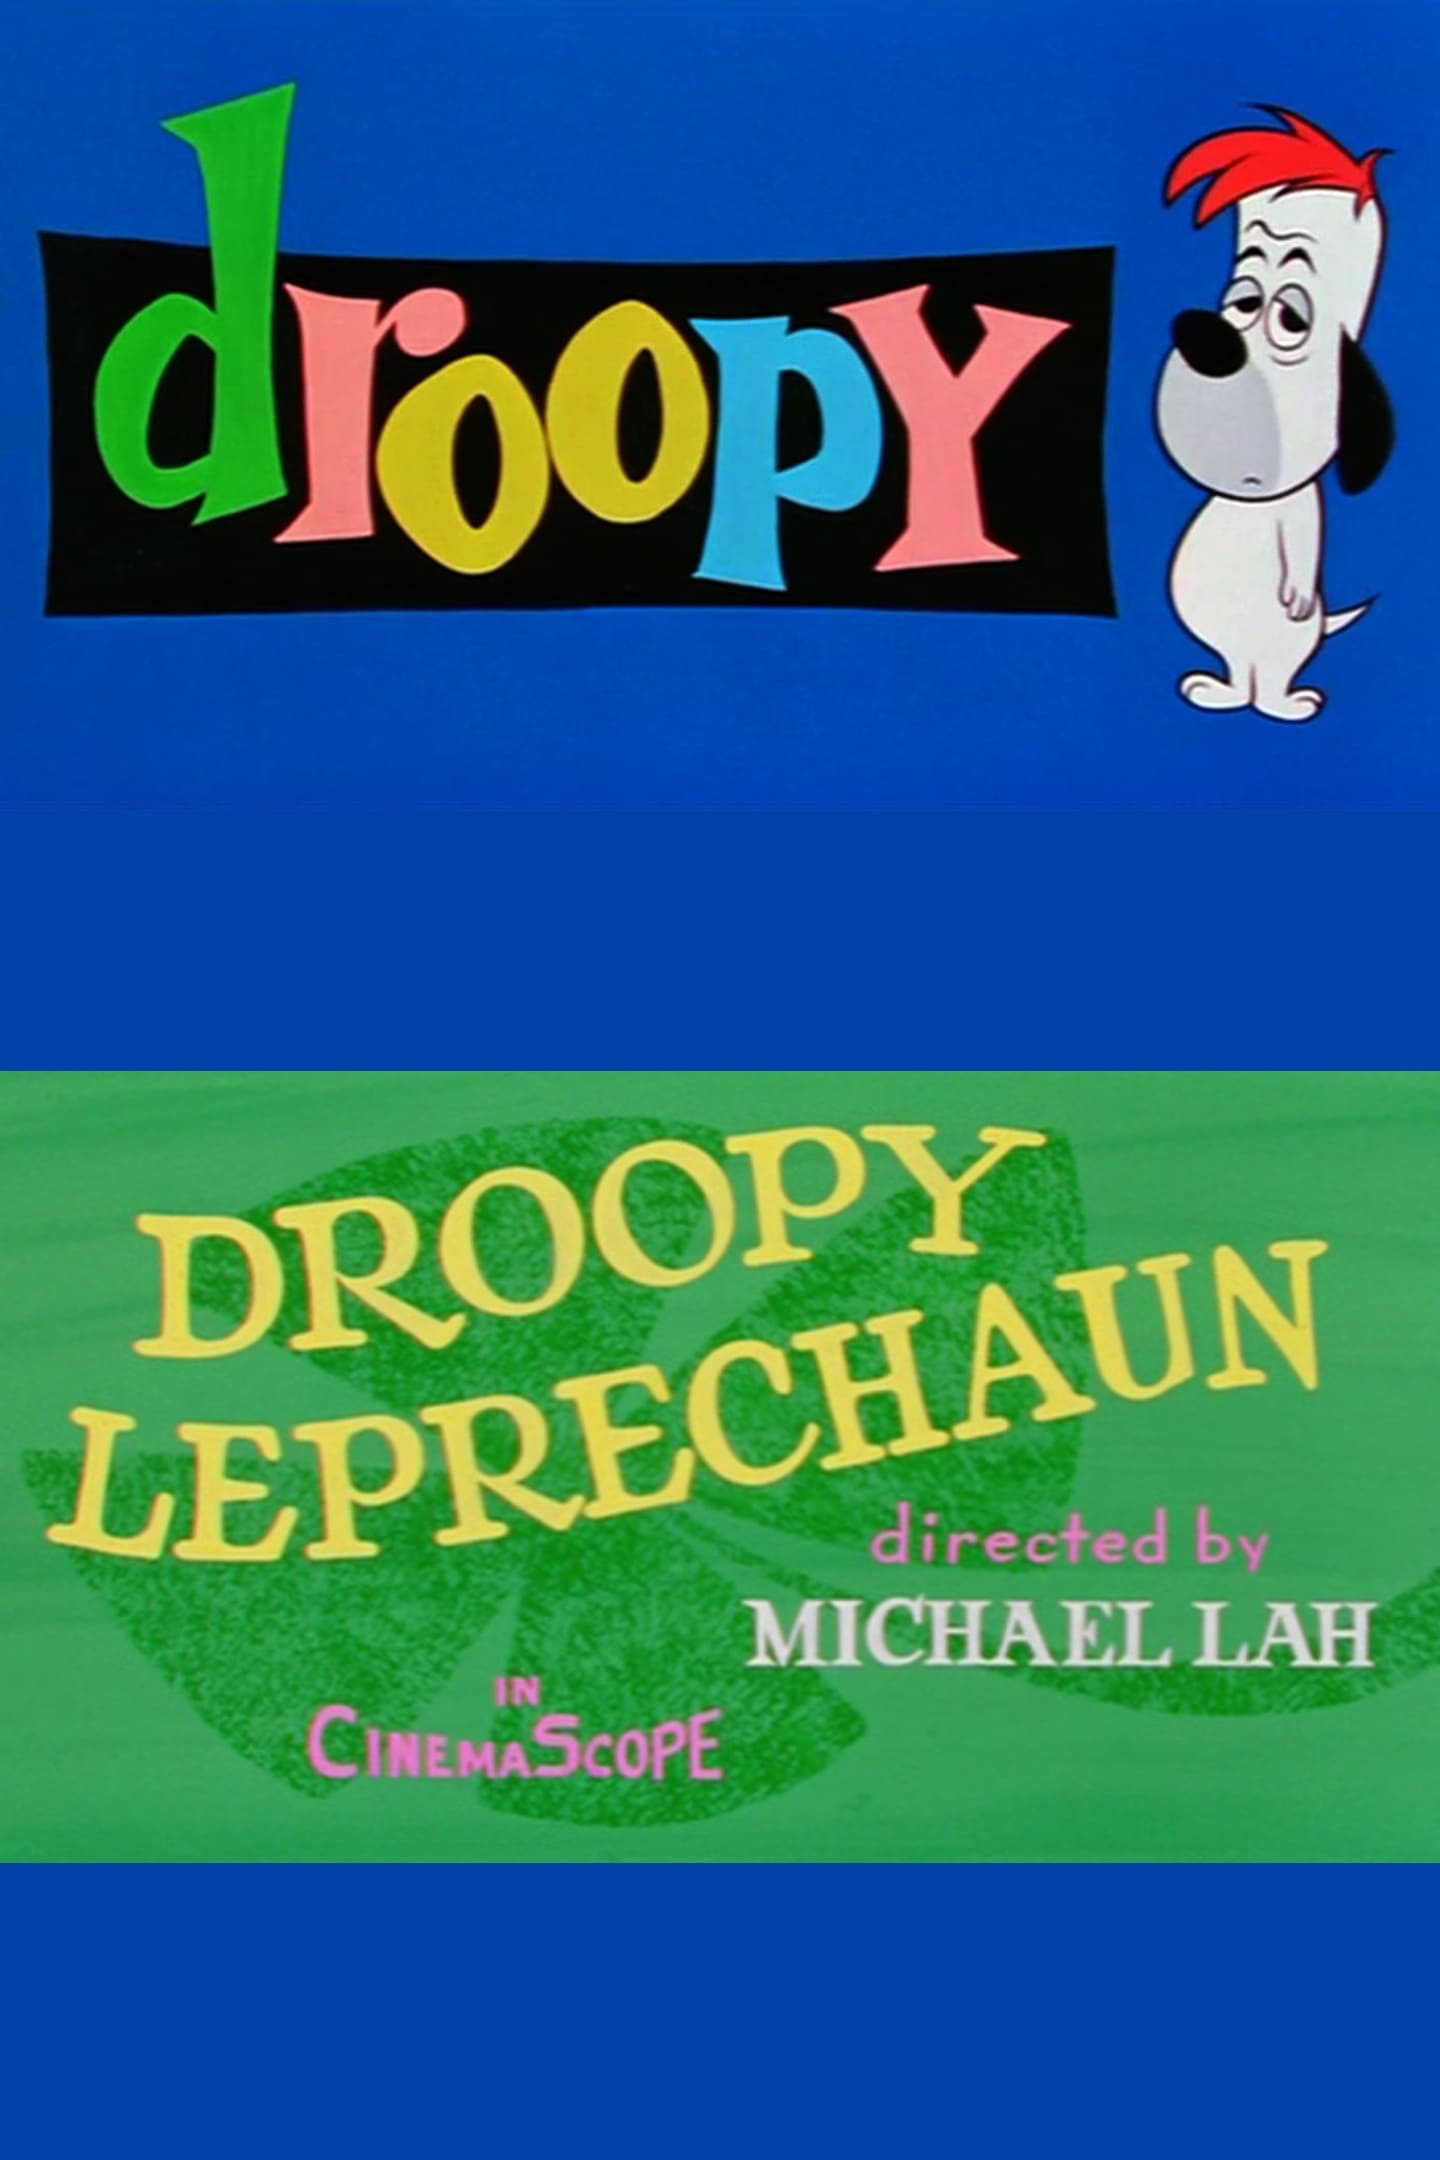 Droopy Leprechaun